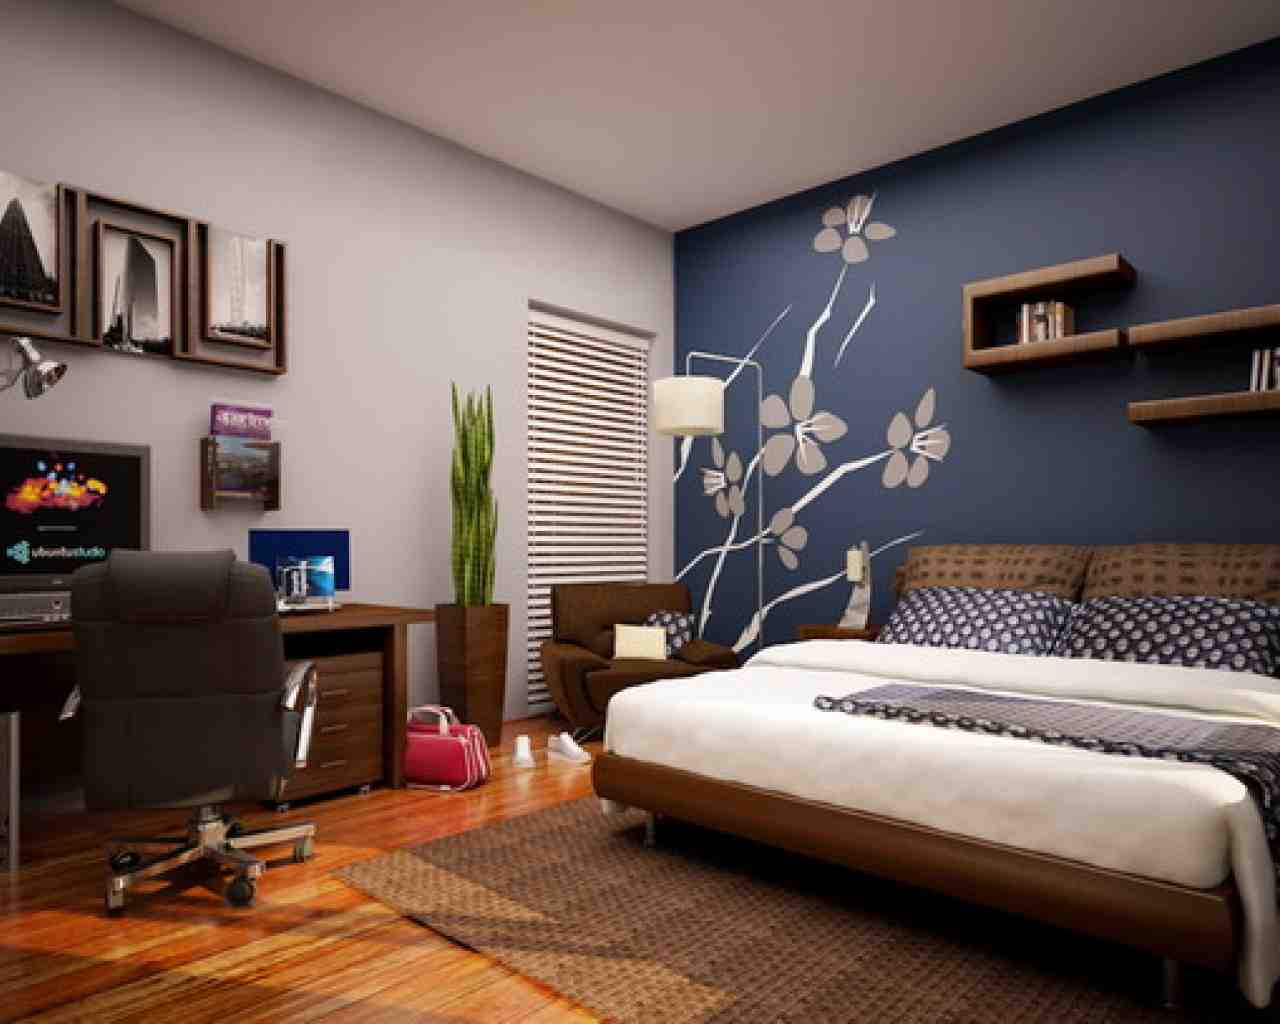 Decorating Bedroom Walls Photos